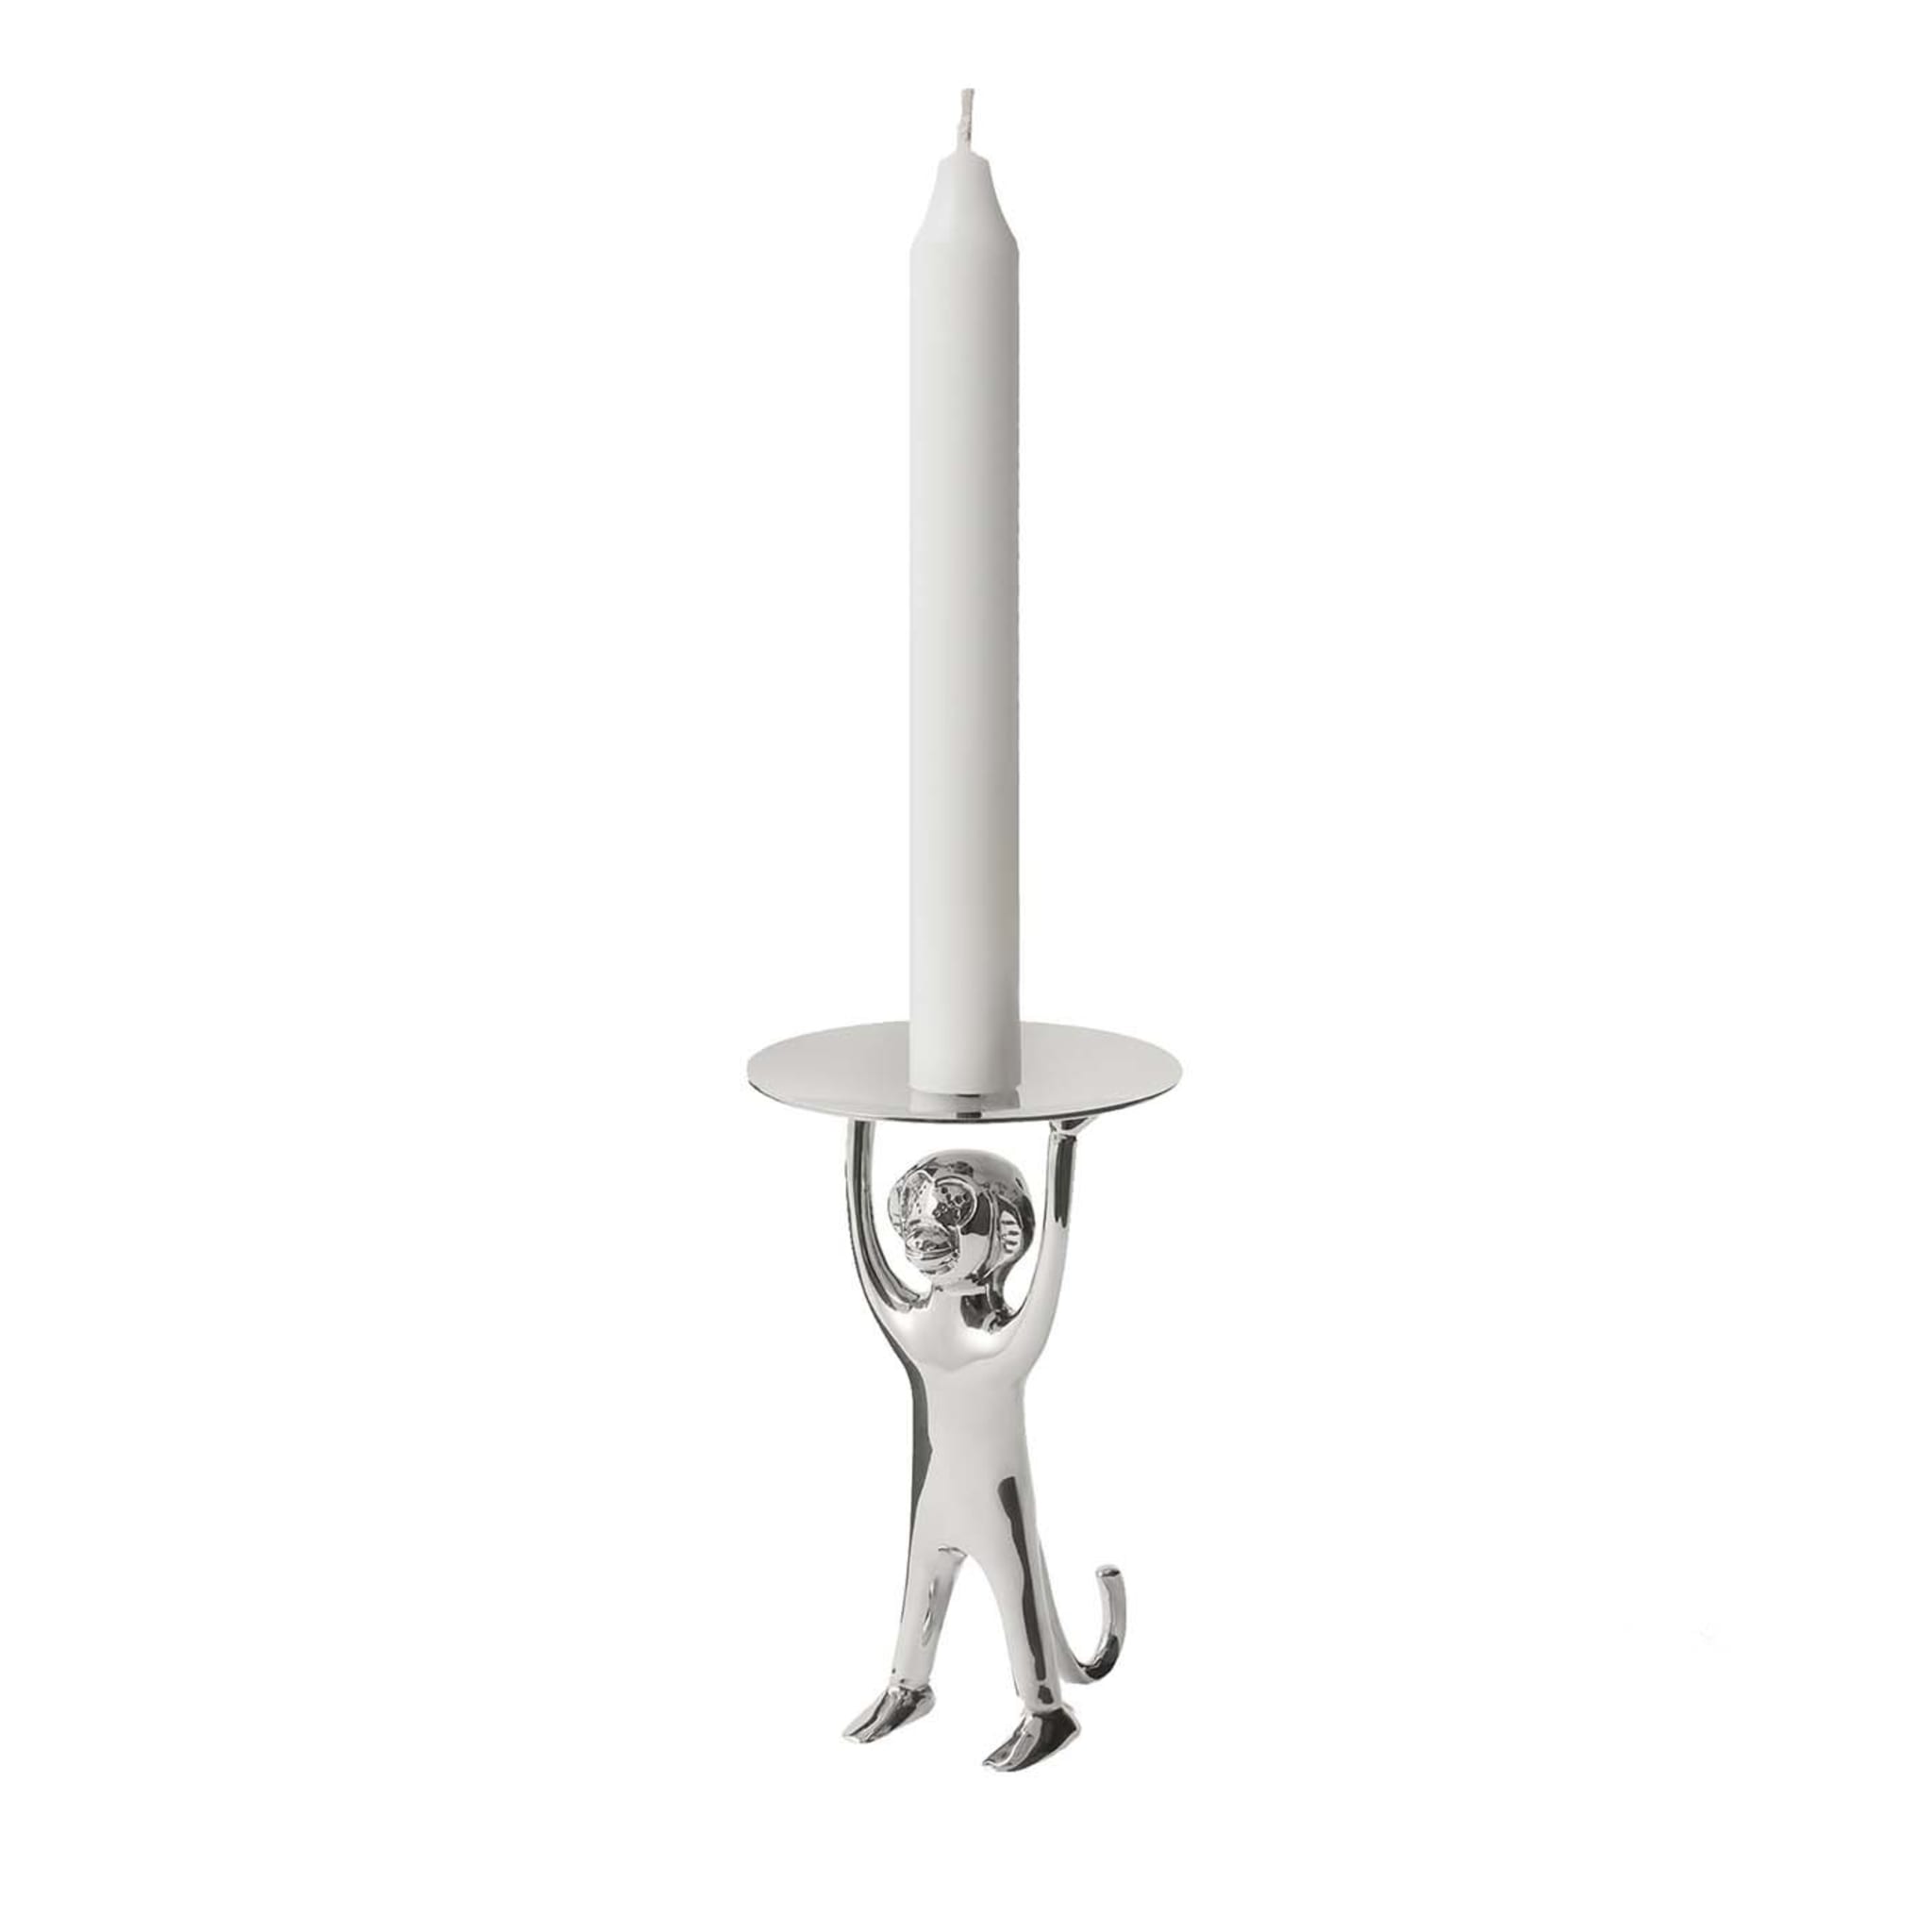 Steel Monki Candleholder by Jaime Hayon - Main view